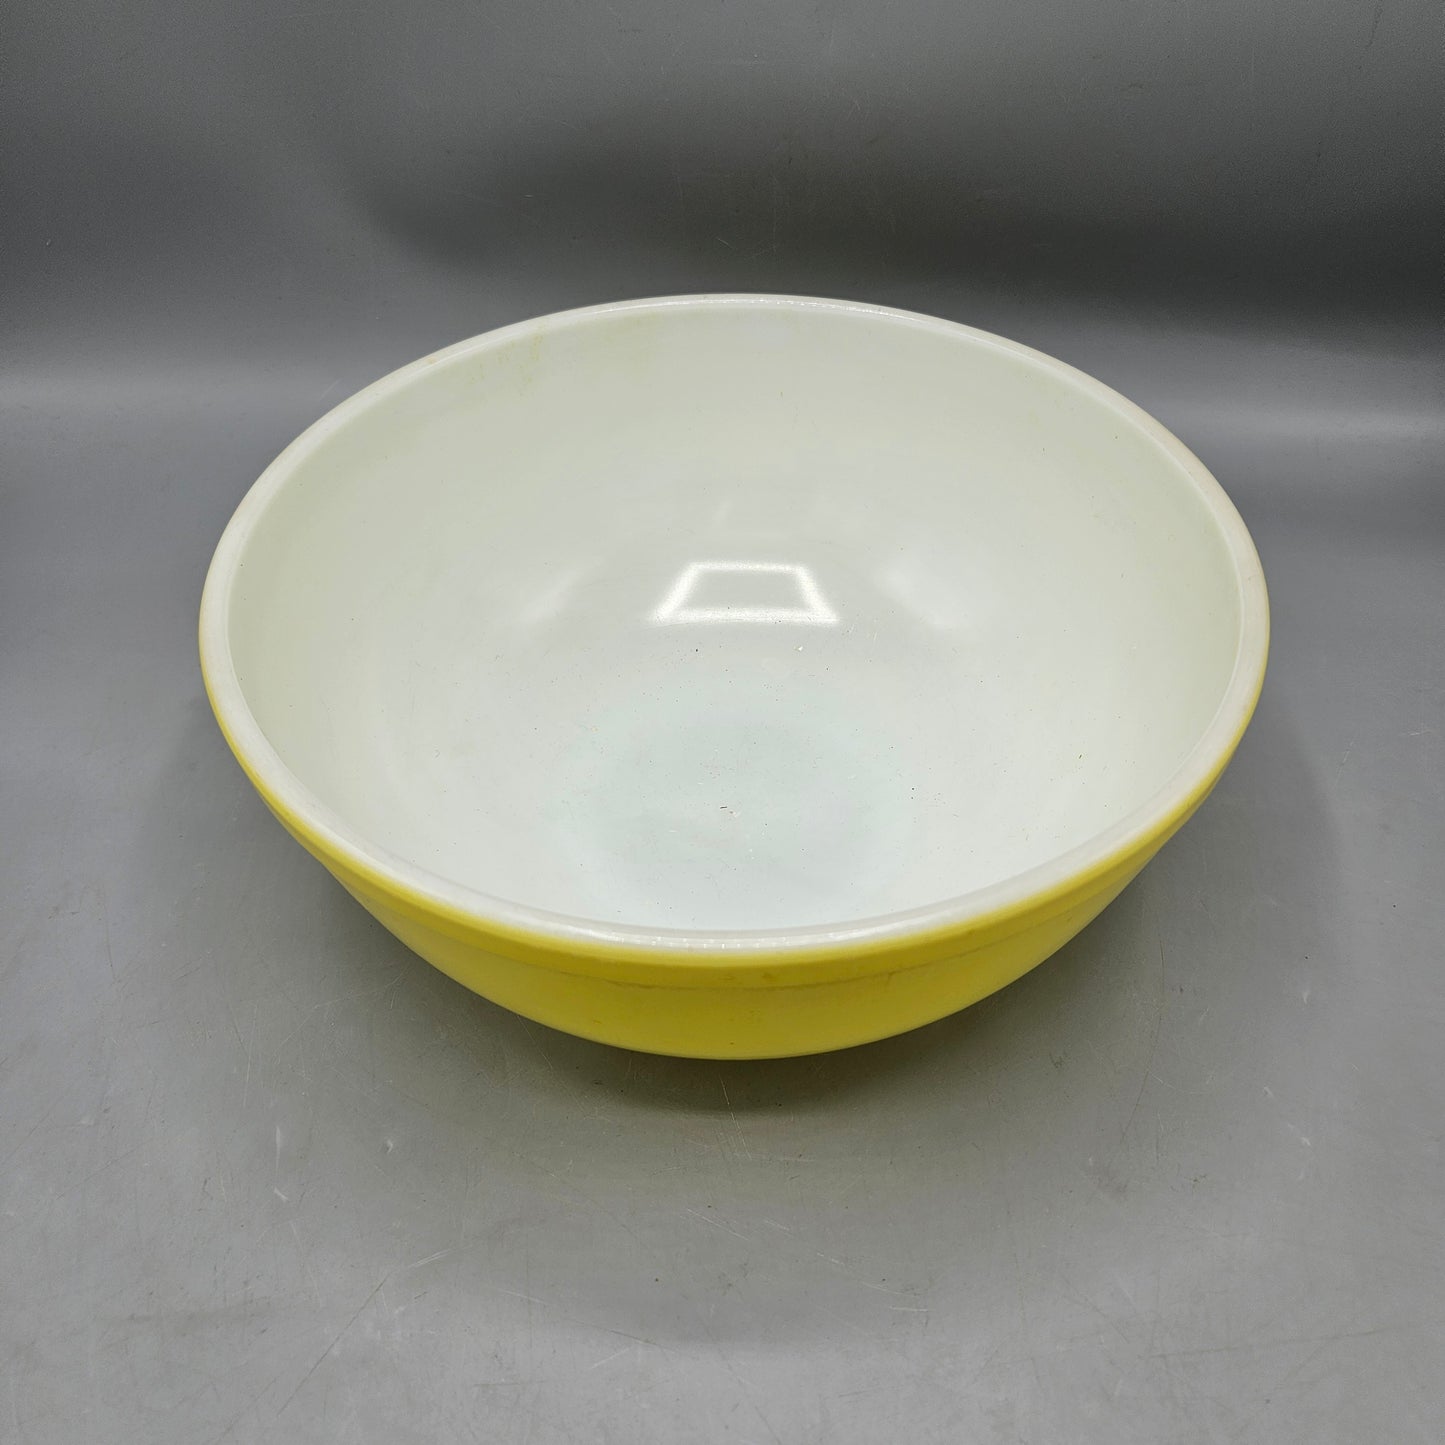 Vintage Pyrex Primary Yellow Round Mixing Bowl